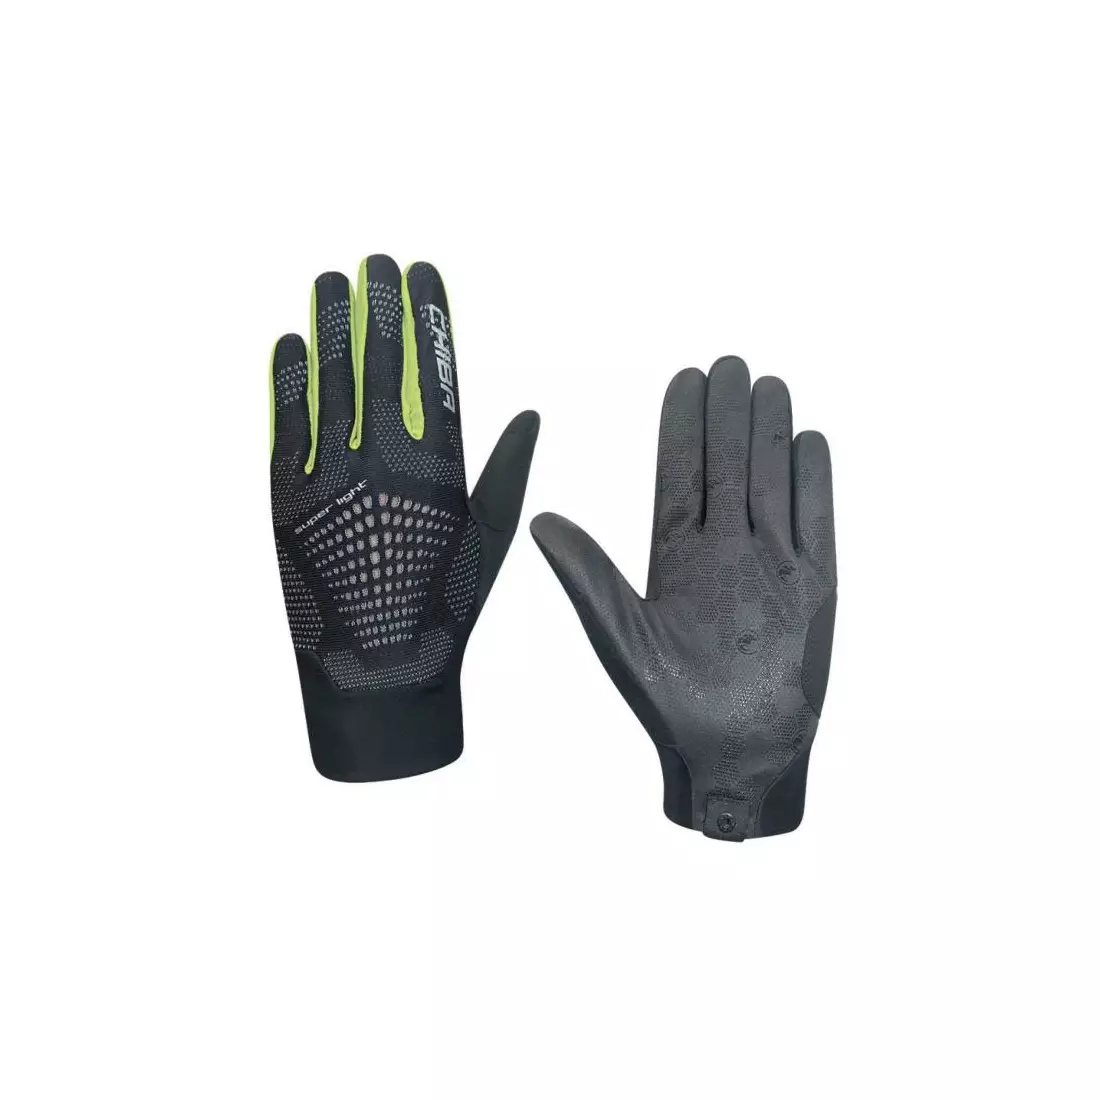 CHIBA mănuși de ciclism SUPERLIGHT negru și galben